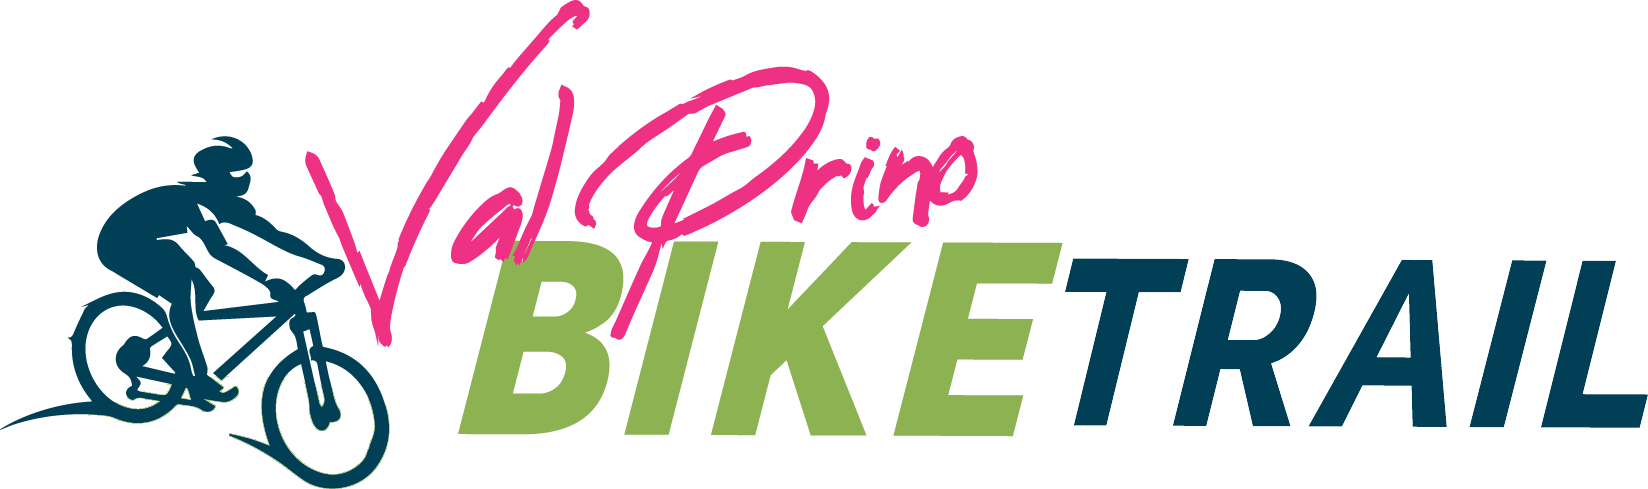 Liguria E-Bike